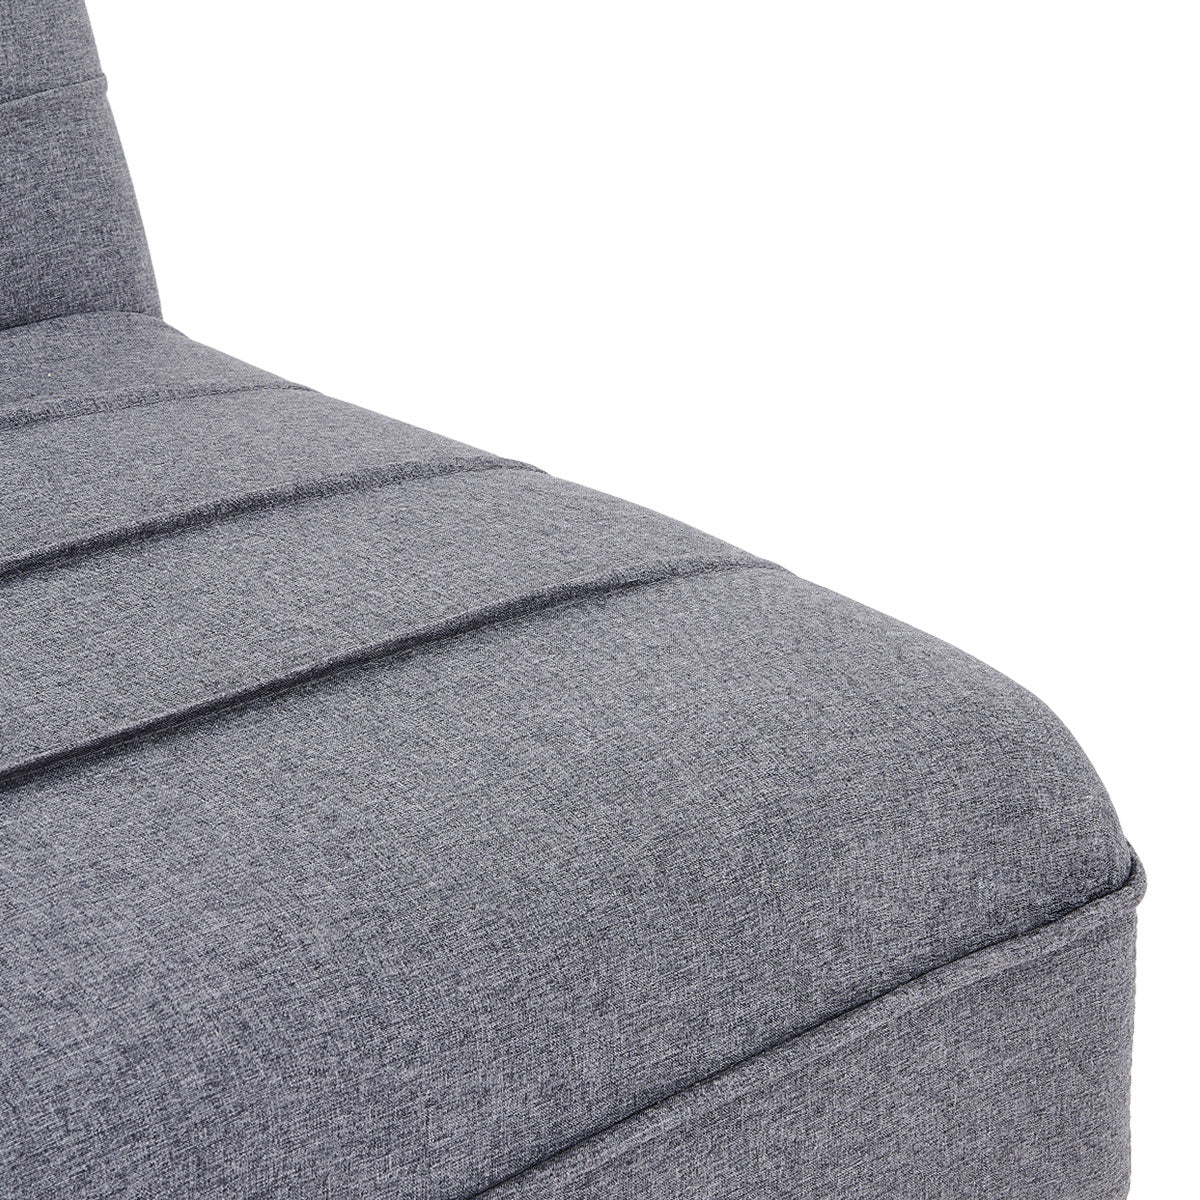 Melanie 3-Seater Linen Fabric Modular Sofa Bed Couch - Dark Grey